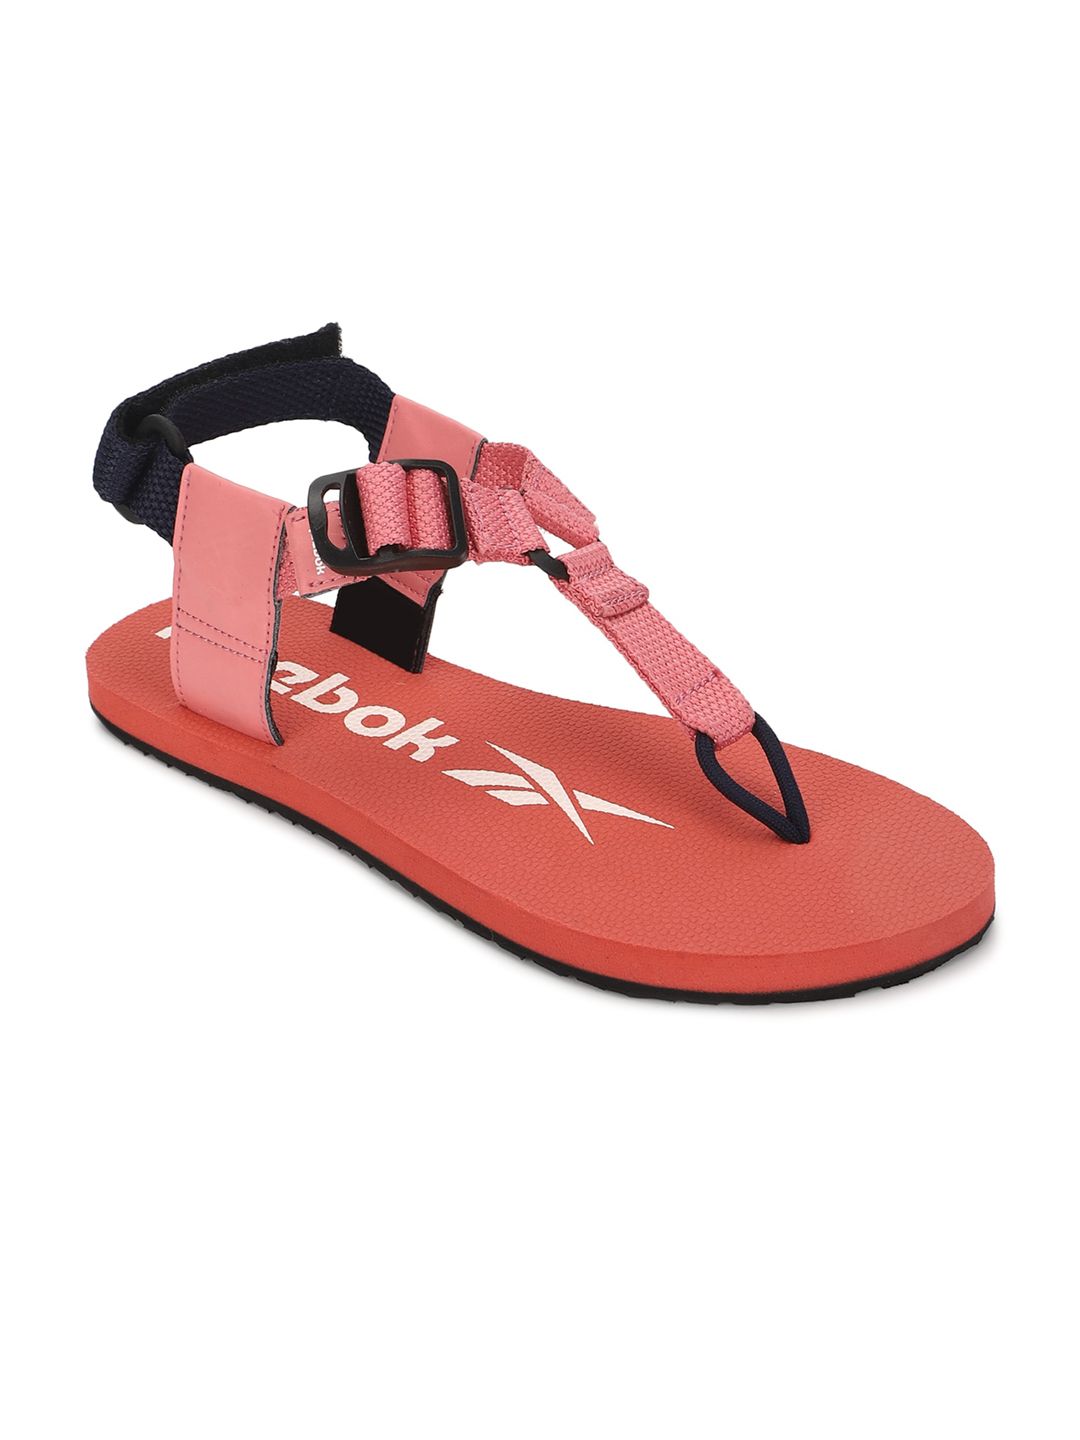 Reebok Women Peach Regular Sports Sandals Price in India